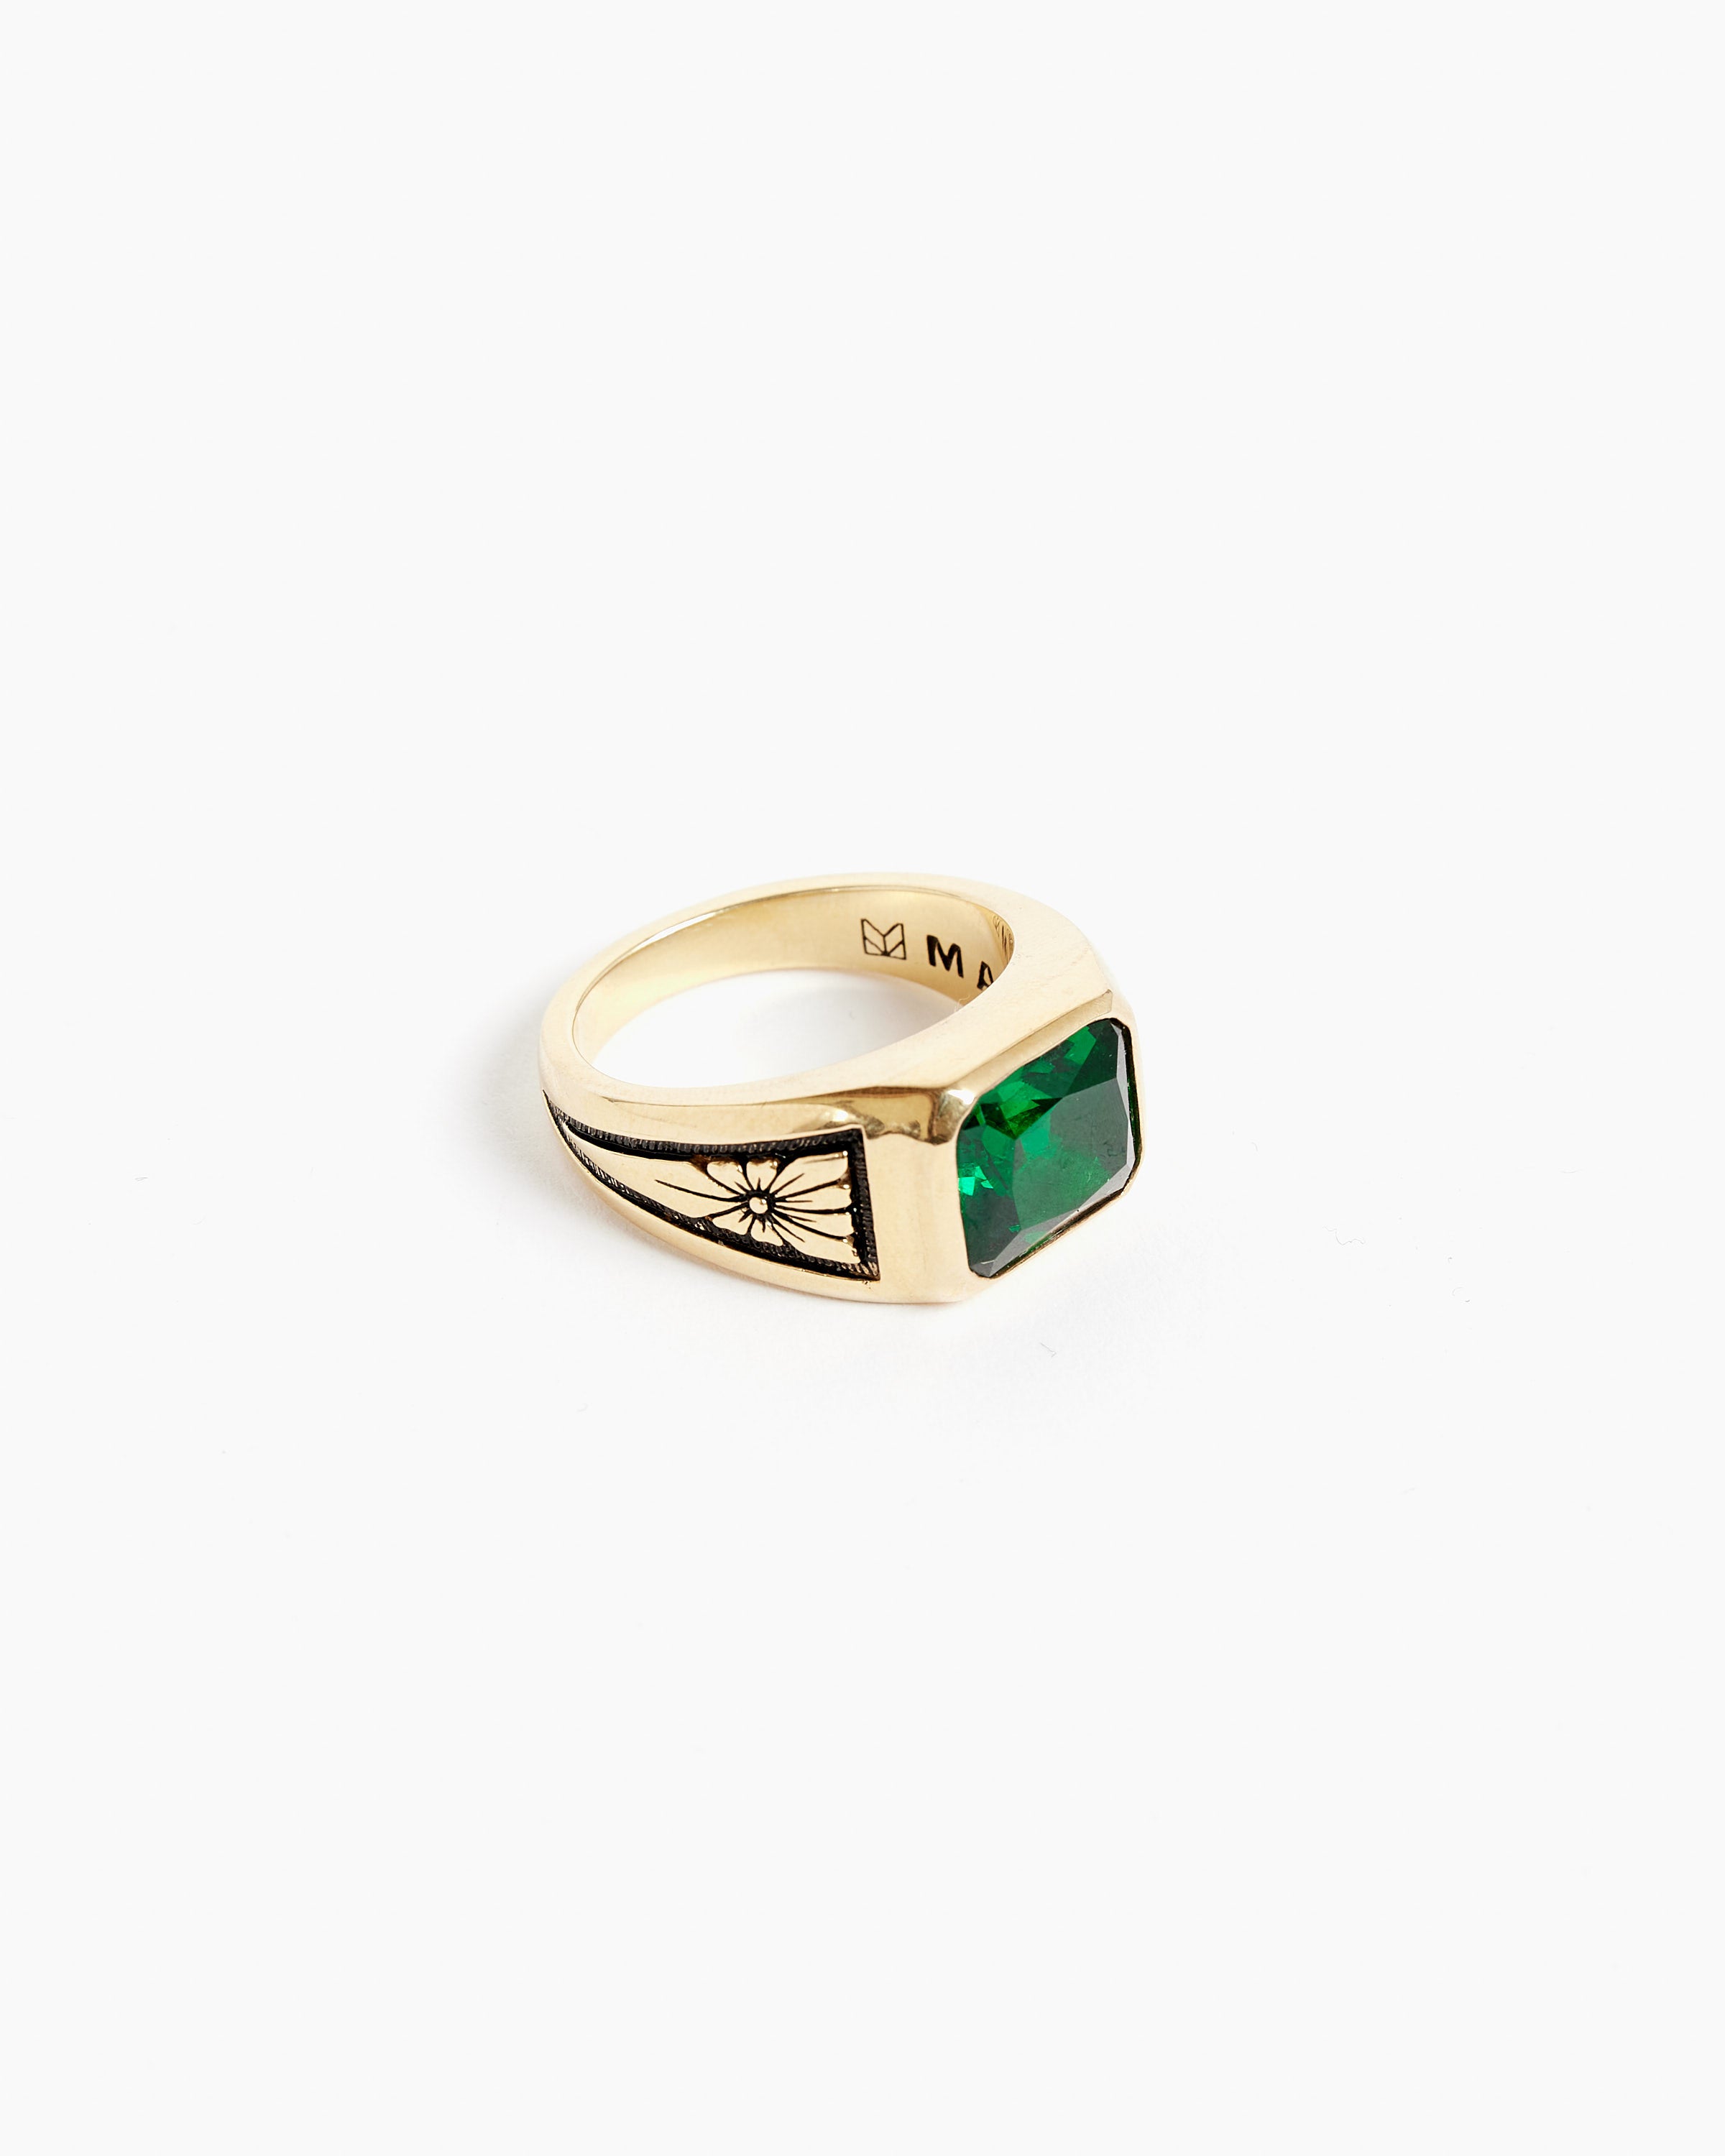 Midnight Ring Slim in 14k Gold/Emerald